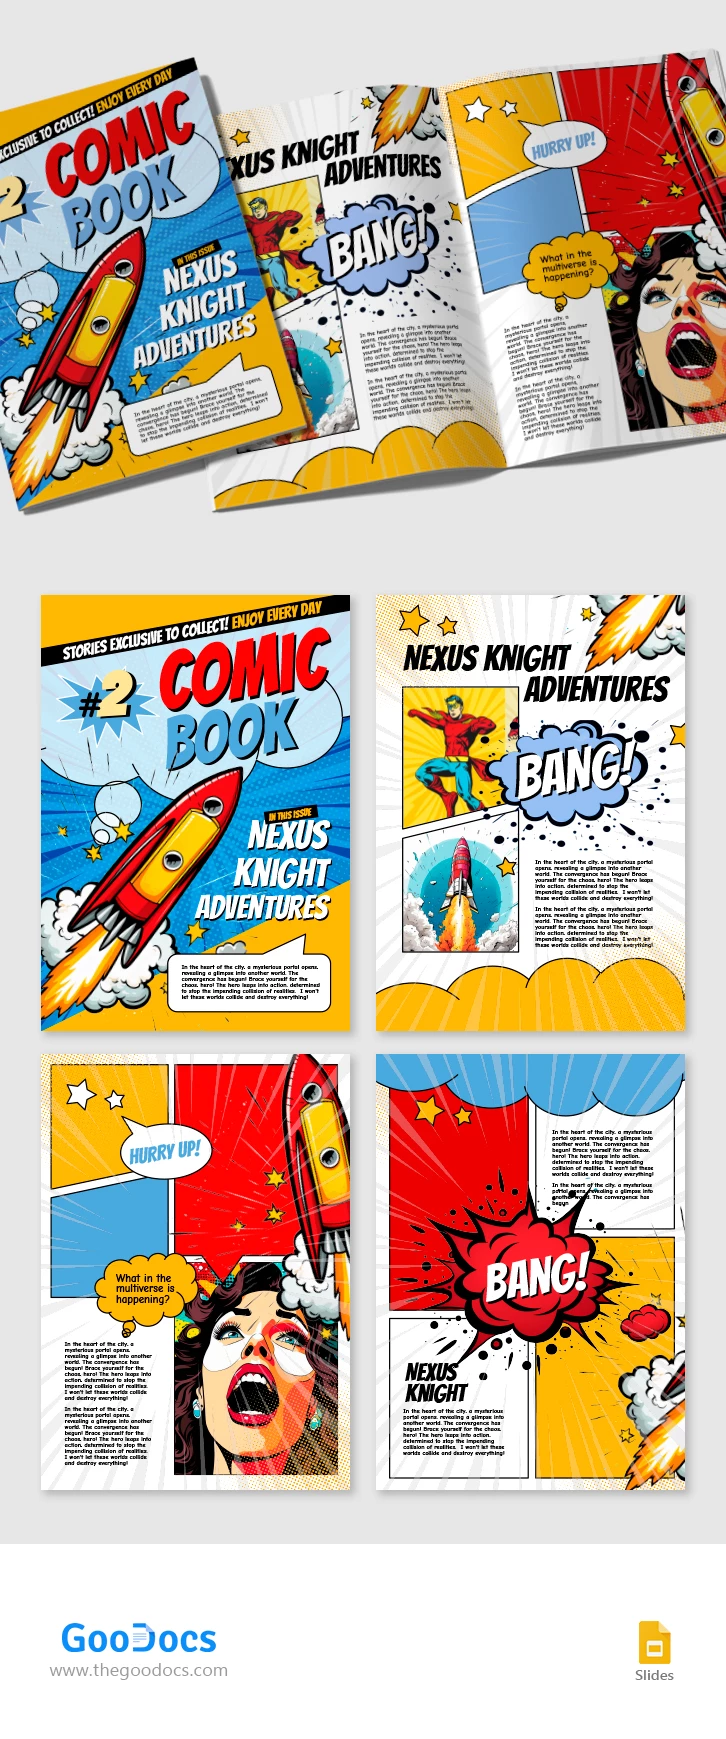 Bunter Comic-Band - free Google Docs Template - 10067886